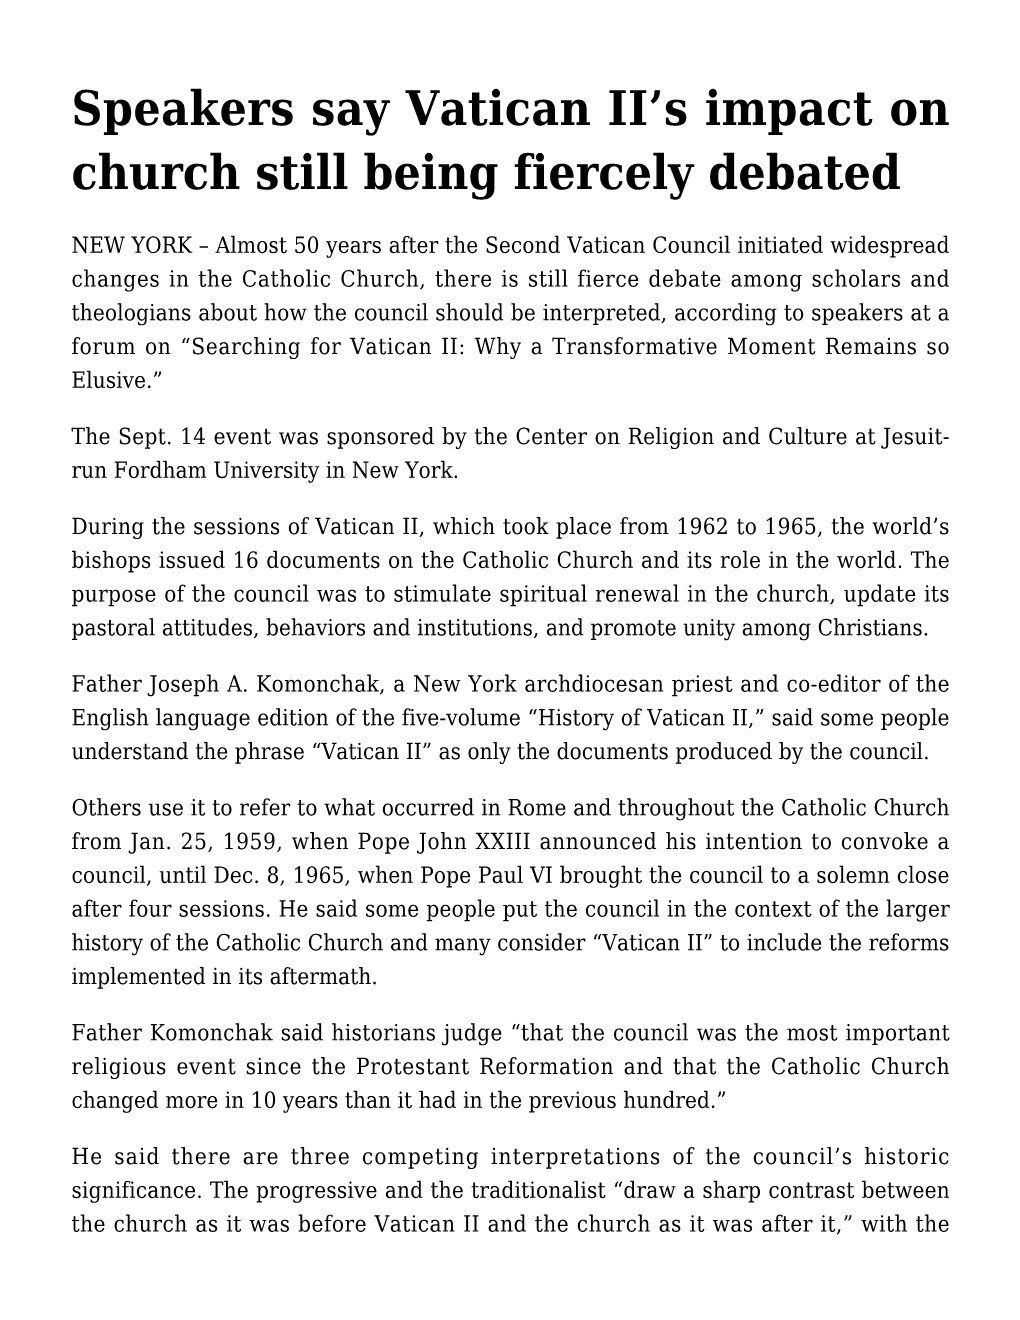 Speakers Say Vatican II's Impact on Church Still Being Fiercely Debated